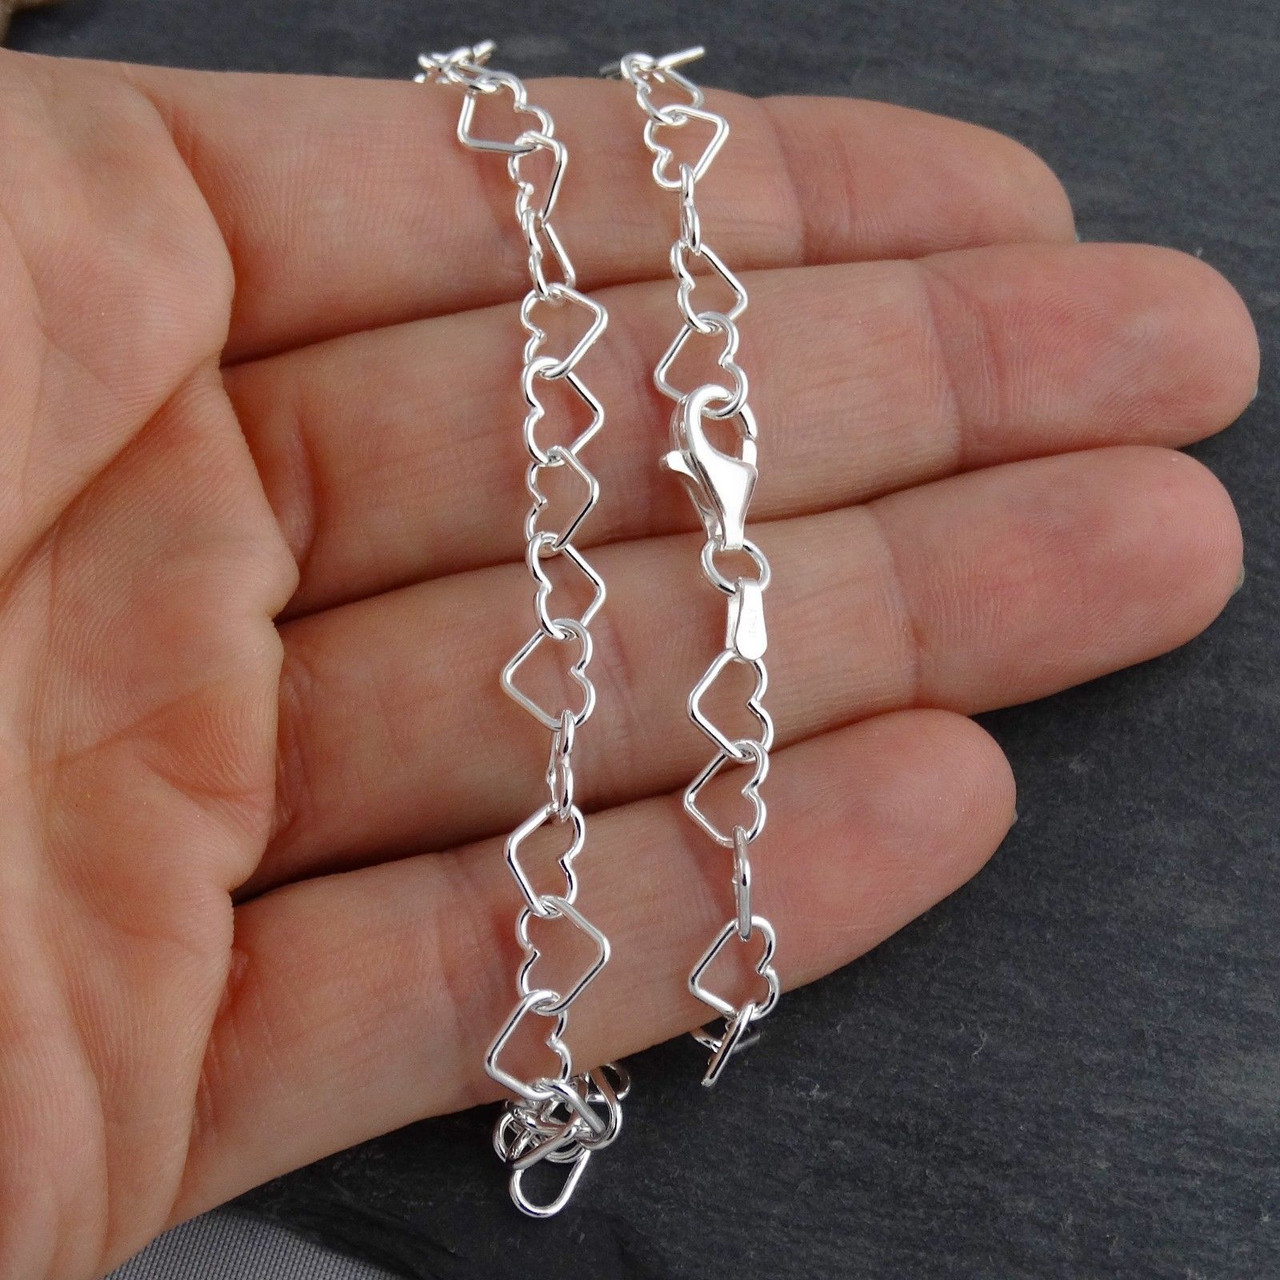 6mm Heart Shape Link Chain Necklace - 925 Sterling Silver - Open Heart  Outline Links